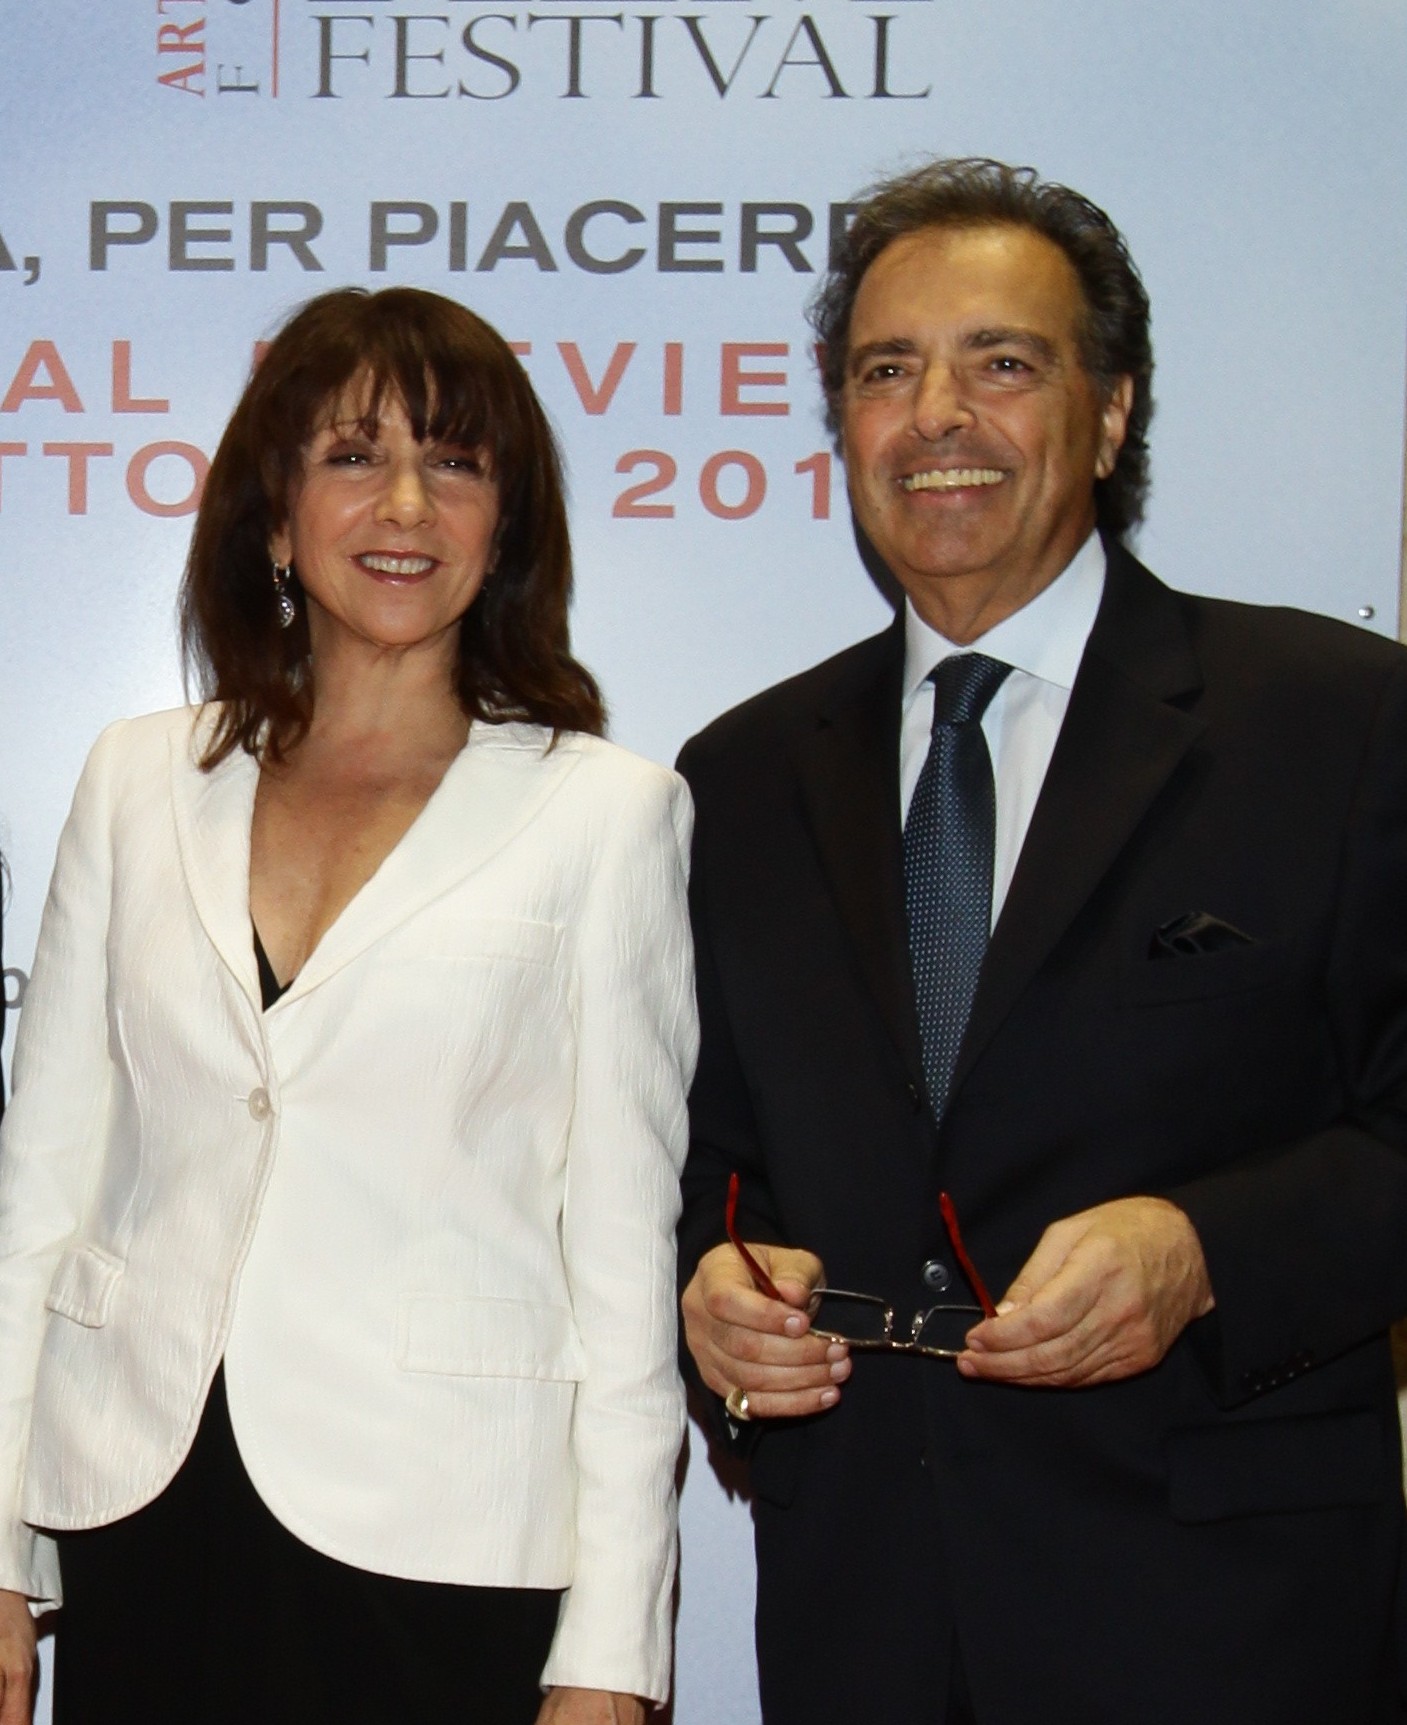 Perugia International Film Festival Preview - "Senso" Gala Screening And Gala Dinner